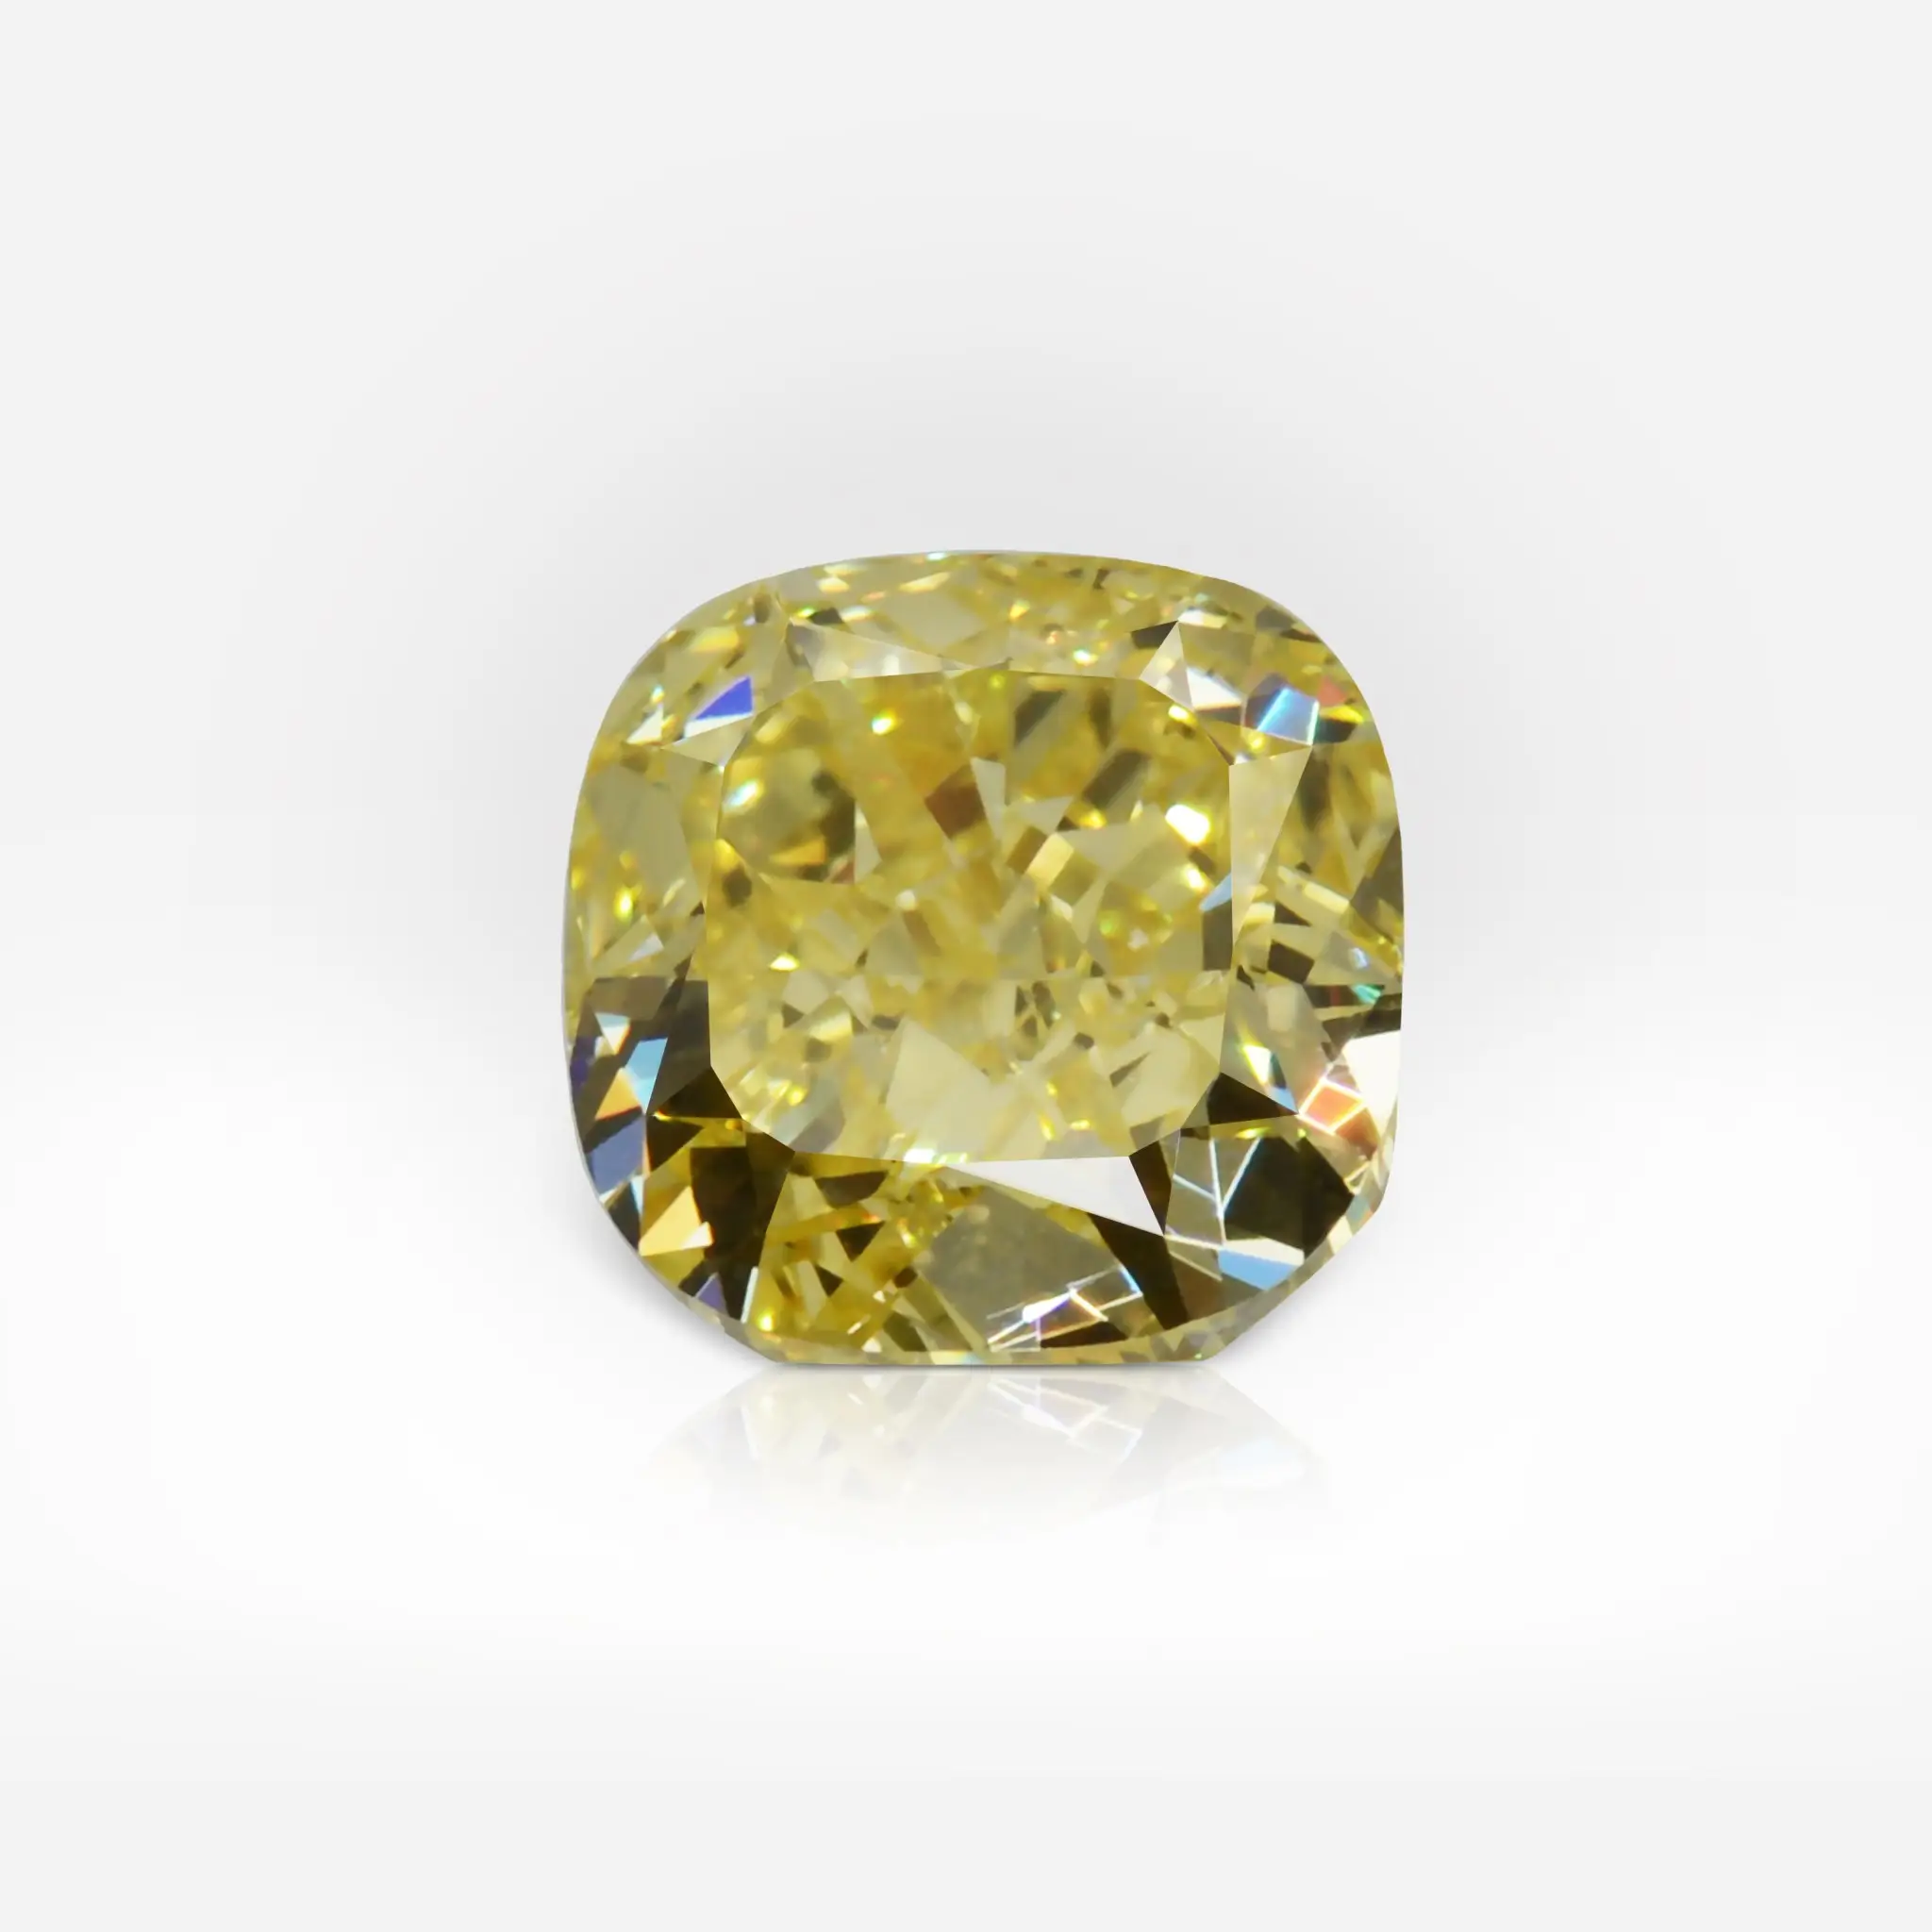 1.79 carat Fancy Vivid Yellow VS2 Cushion Shape Diamond GIA - picture 1